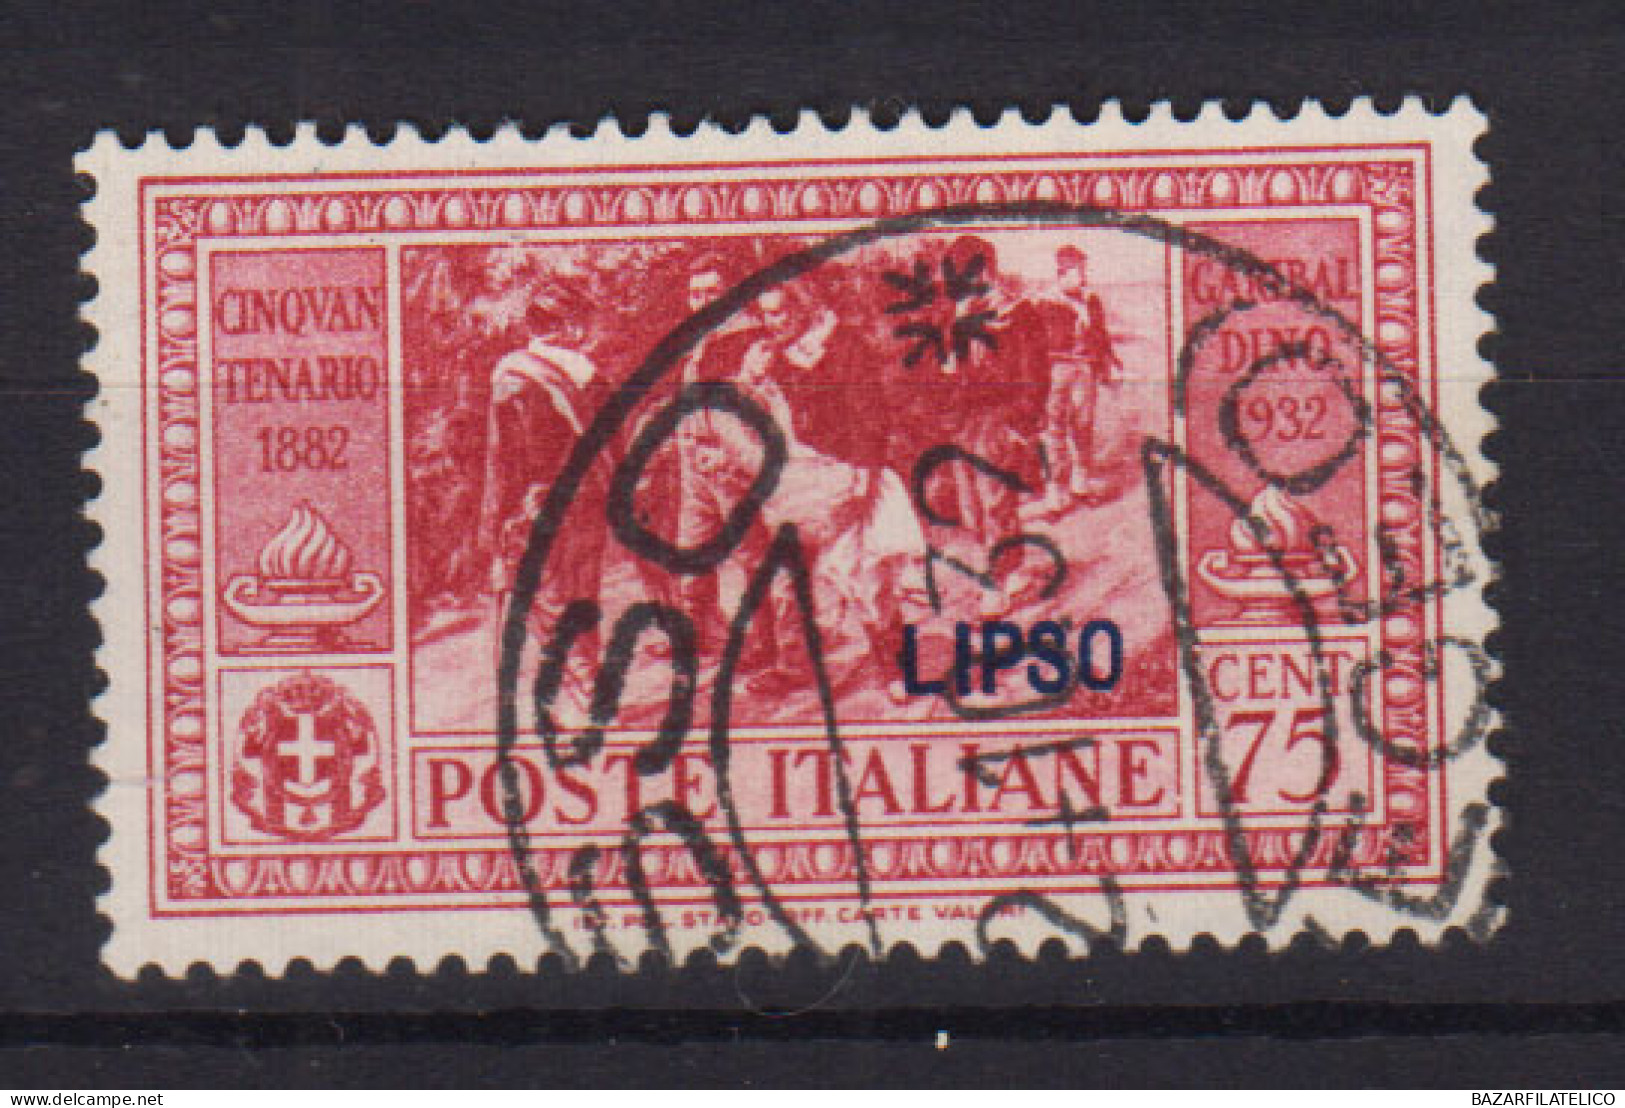 COLONIE EGEO LIPSO 1932 GARIBALDI 75 CENTESIMI N.22 USATO - Egeo (Lipso)